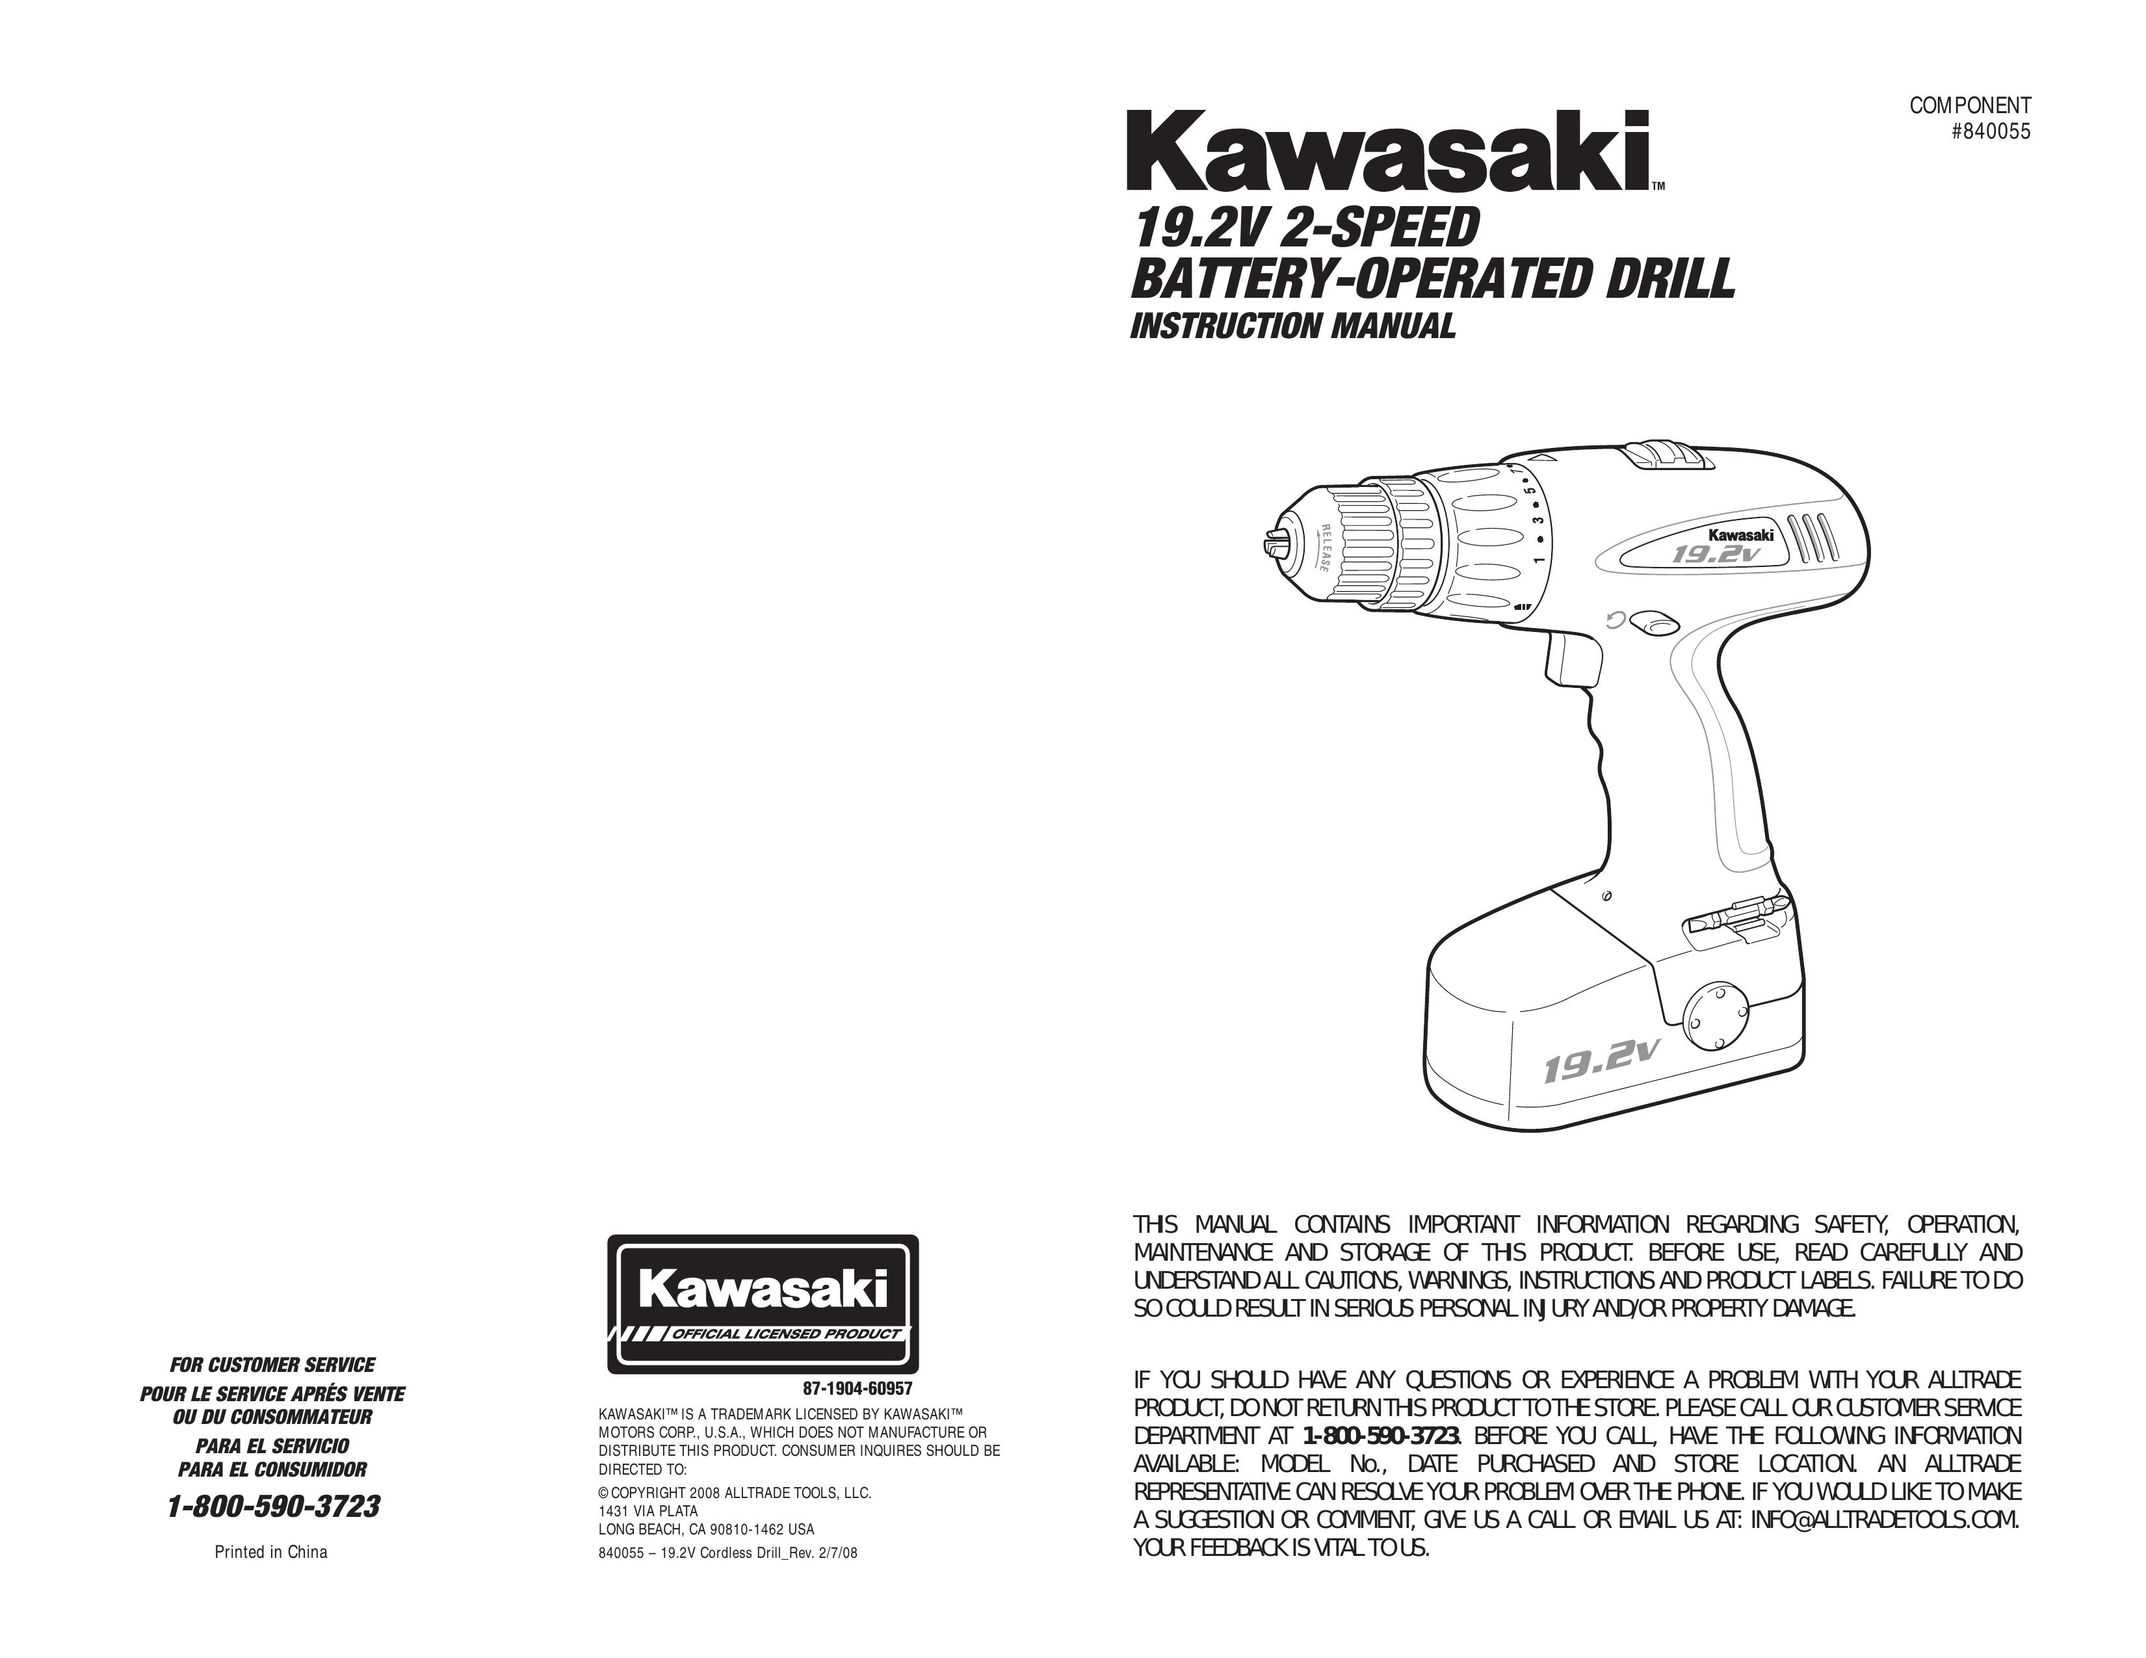 Kawasaki 840055 Drill User Manual